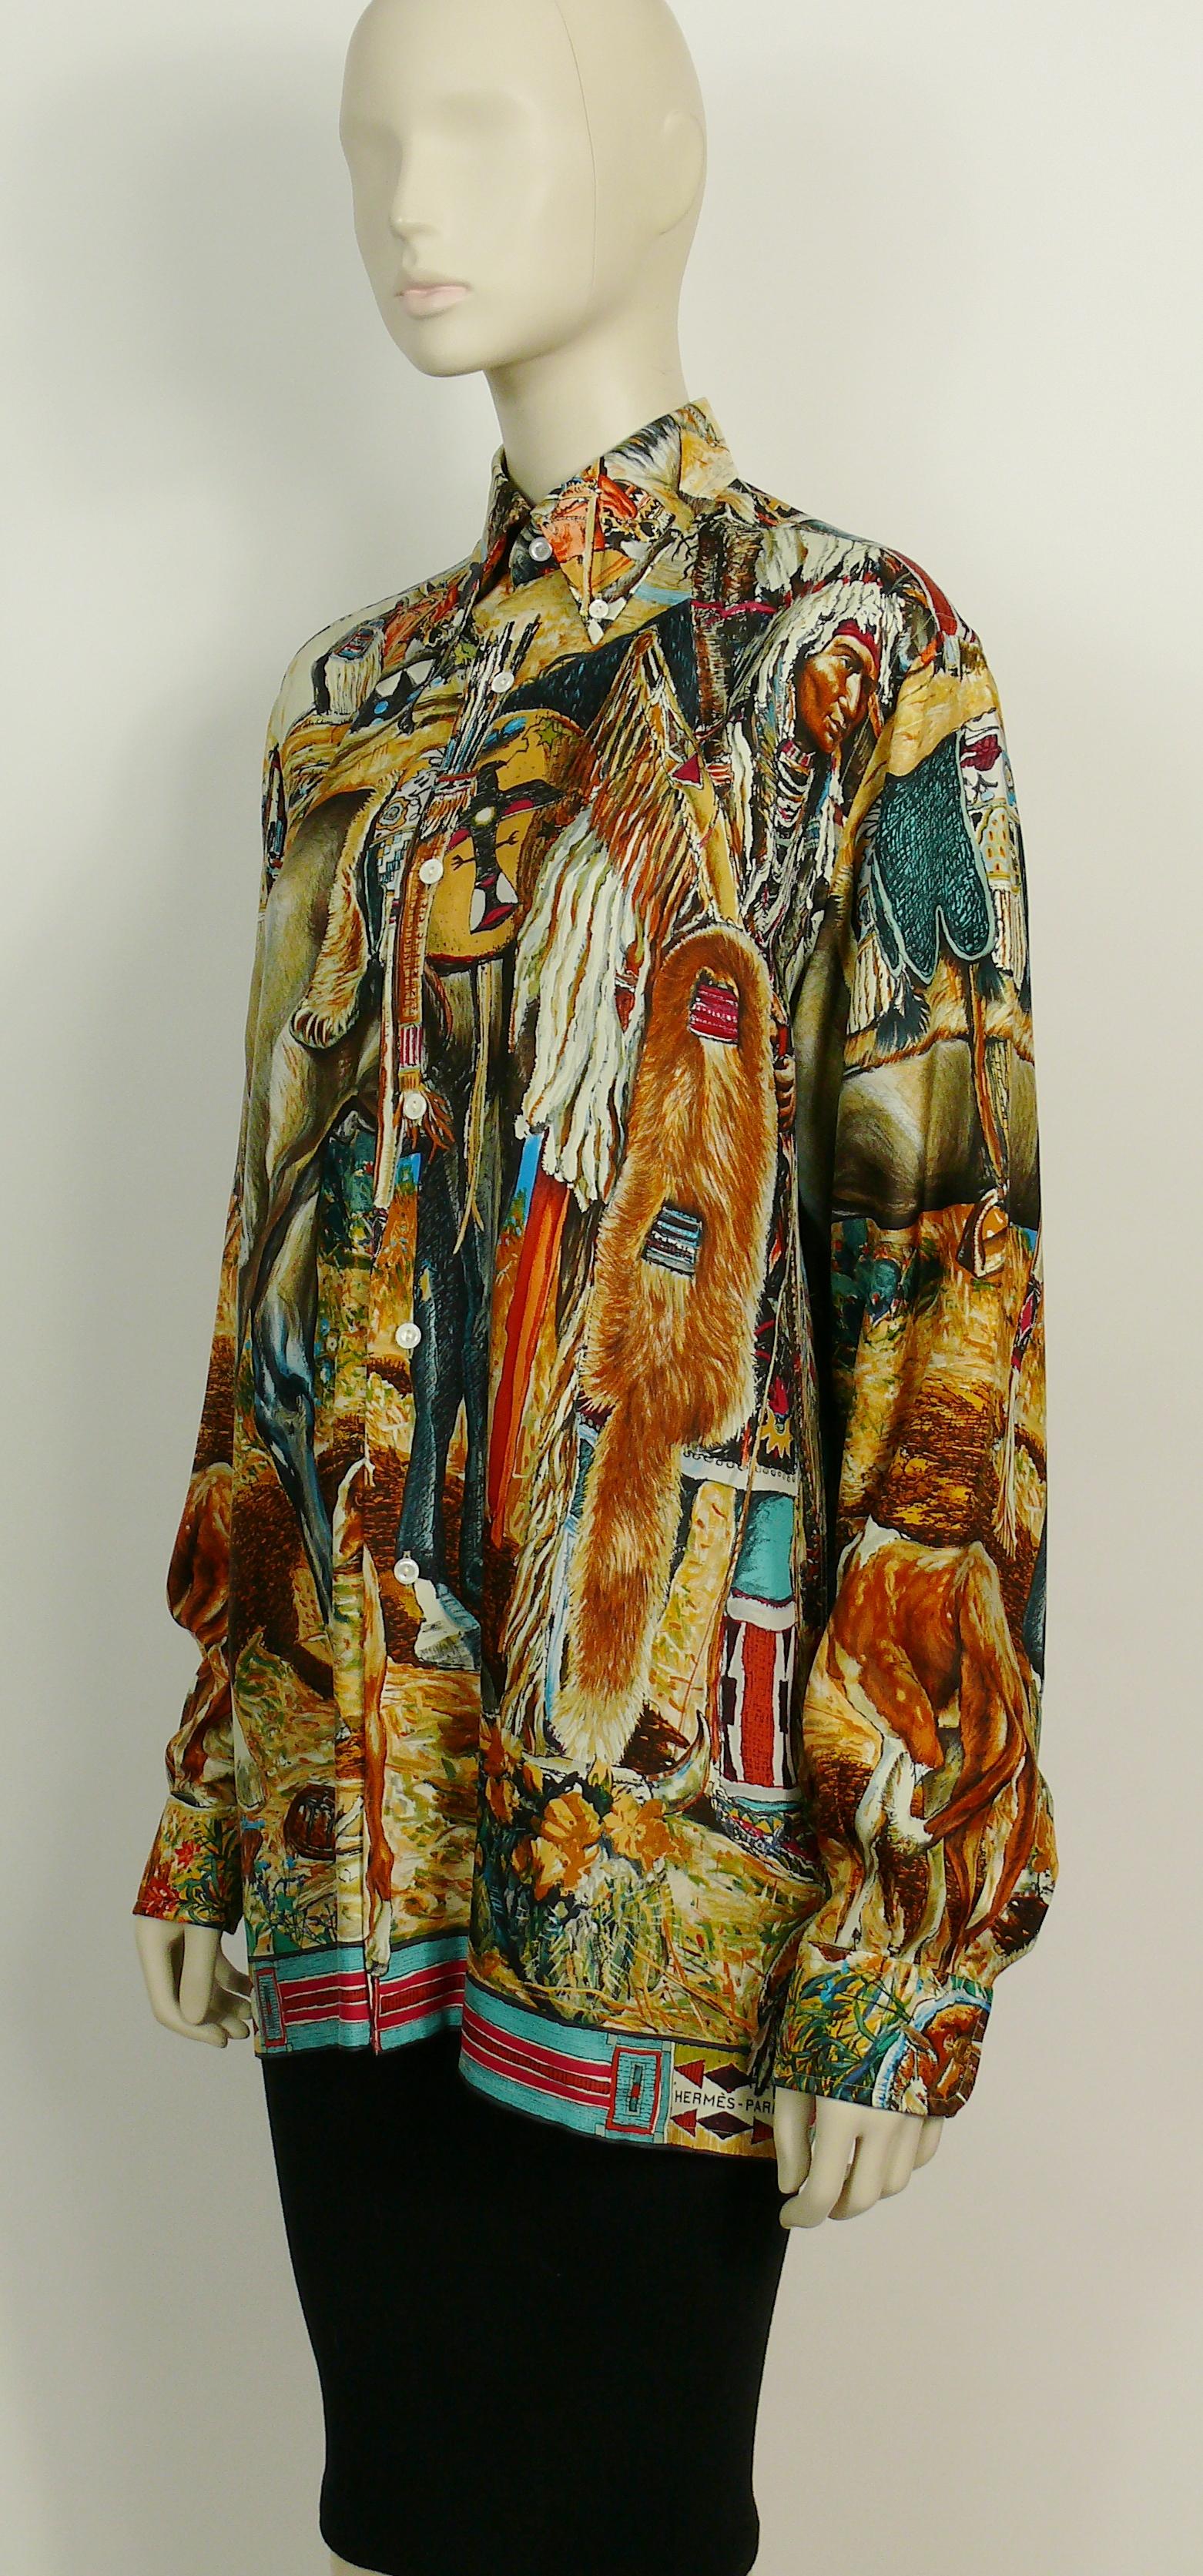 Hermes Vintage Native American Indian Shirt by Kermit Oliver For Sale ...